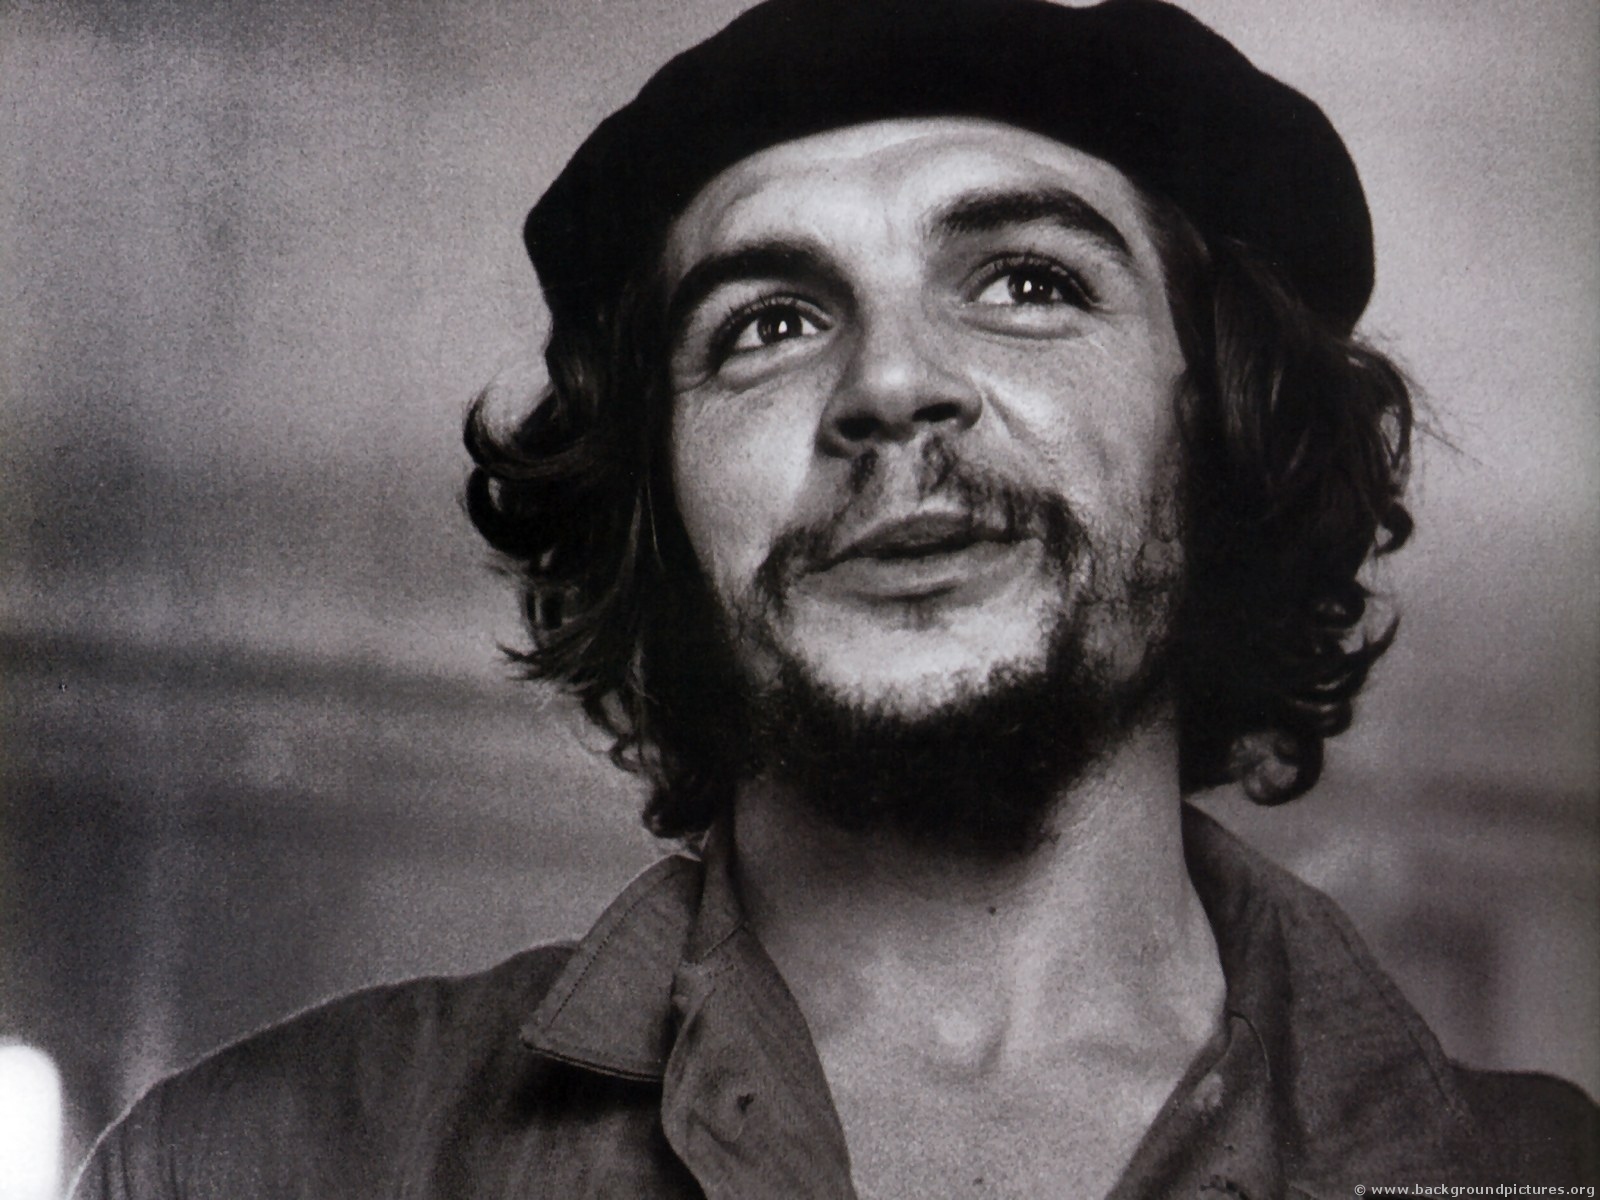 https://blogger.googleusercontent.com/img/b/R29vZ2xl/AVvXsEgKvQr5wDyn9B21Ce6WdWNrUioSie71wbWaKs9zxQrDdQ9VrLP1mhi4tcEG56flVITebJSJNyTNWxqZmI5V8VgtgXlXmLzDAkeiHAkQryXFgUpkdLpiwSdyhyphenhyphenSNcHq1sGeURaTSKnsDQQSw/s1600/Che-Guevara-Rare-Pictures-5.jpg